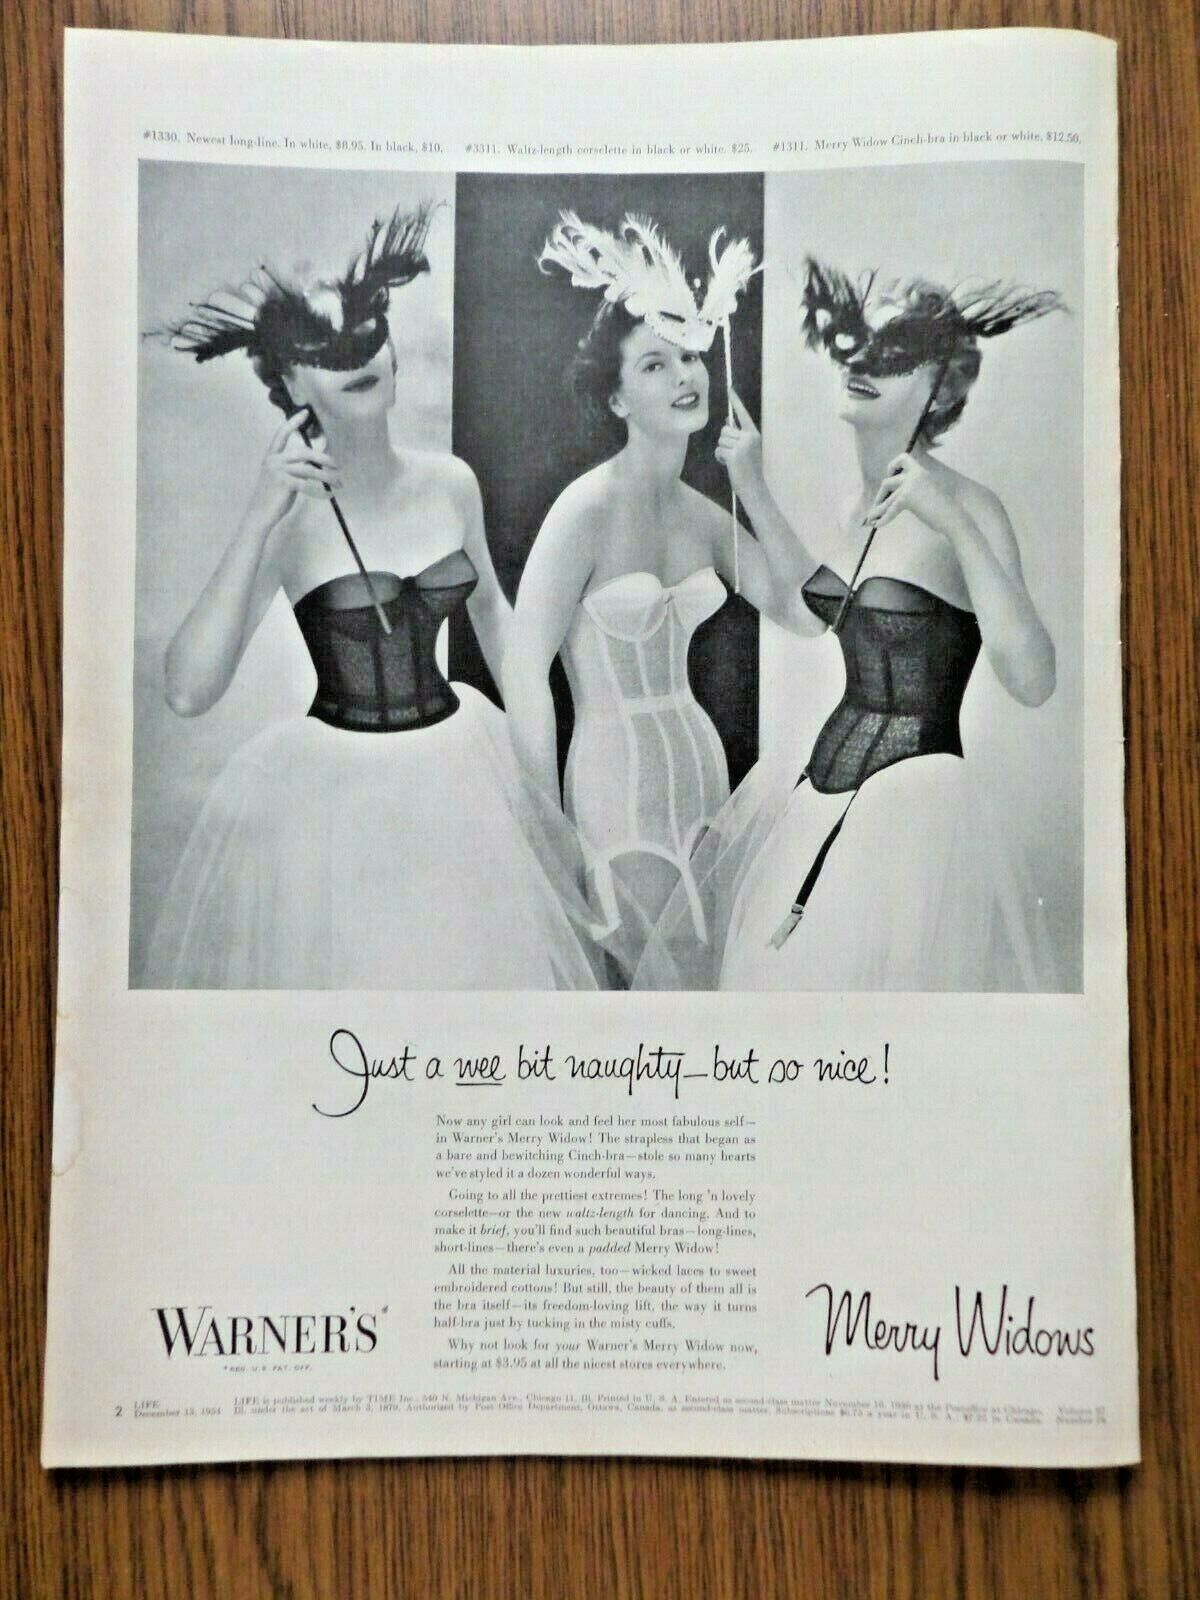 1954 Warner's Bra Girdle Ad Merry Widows Just a wee bit Naughty but so nice